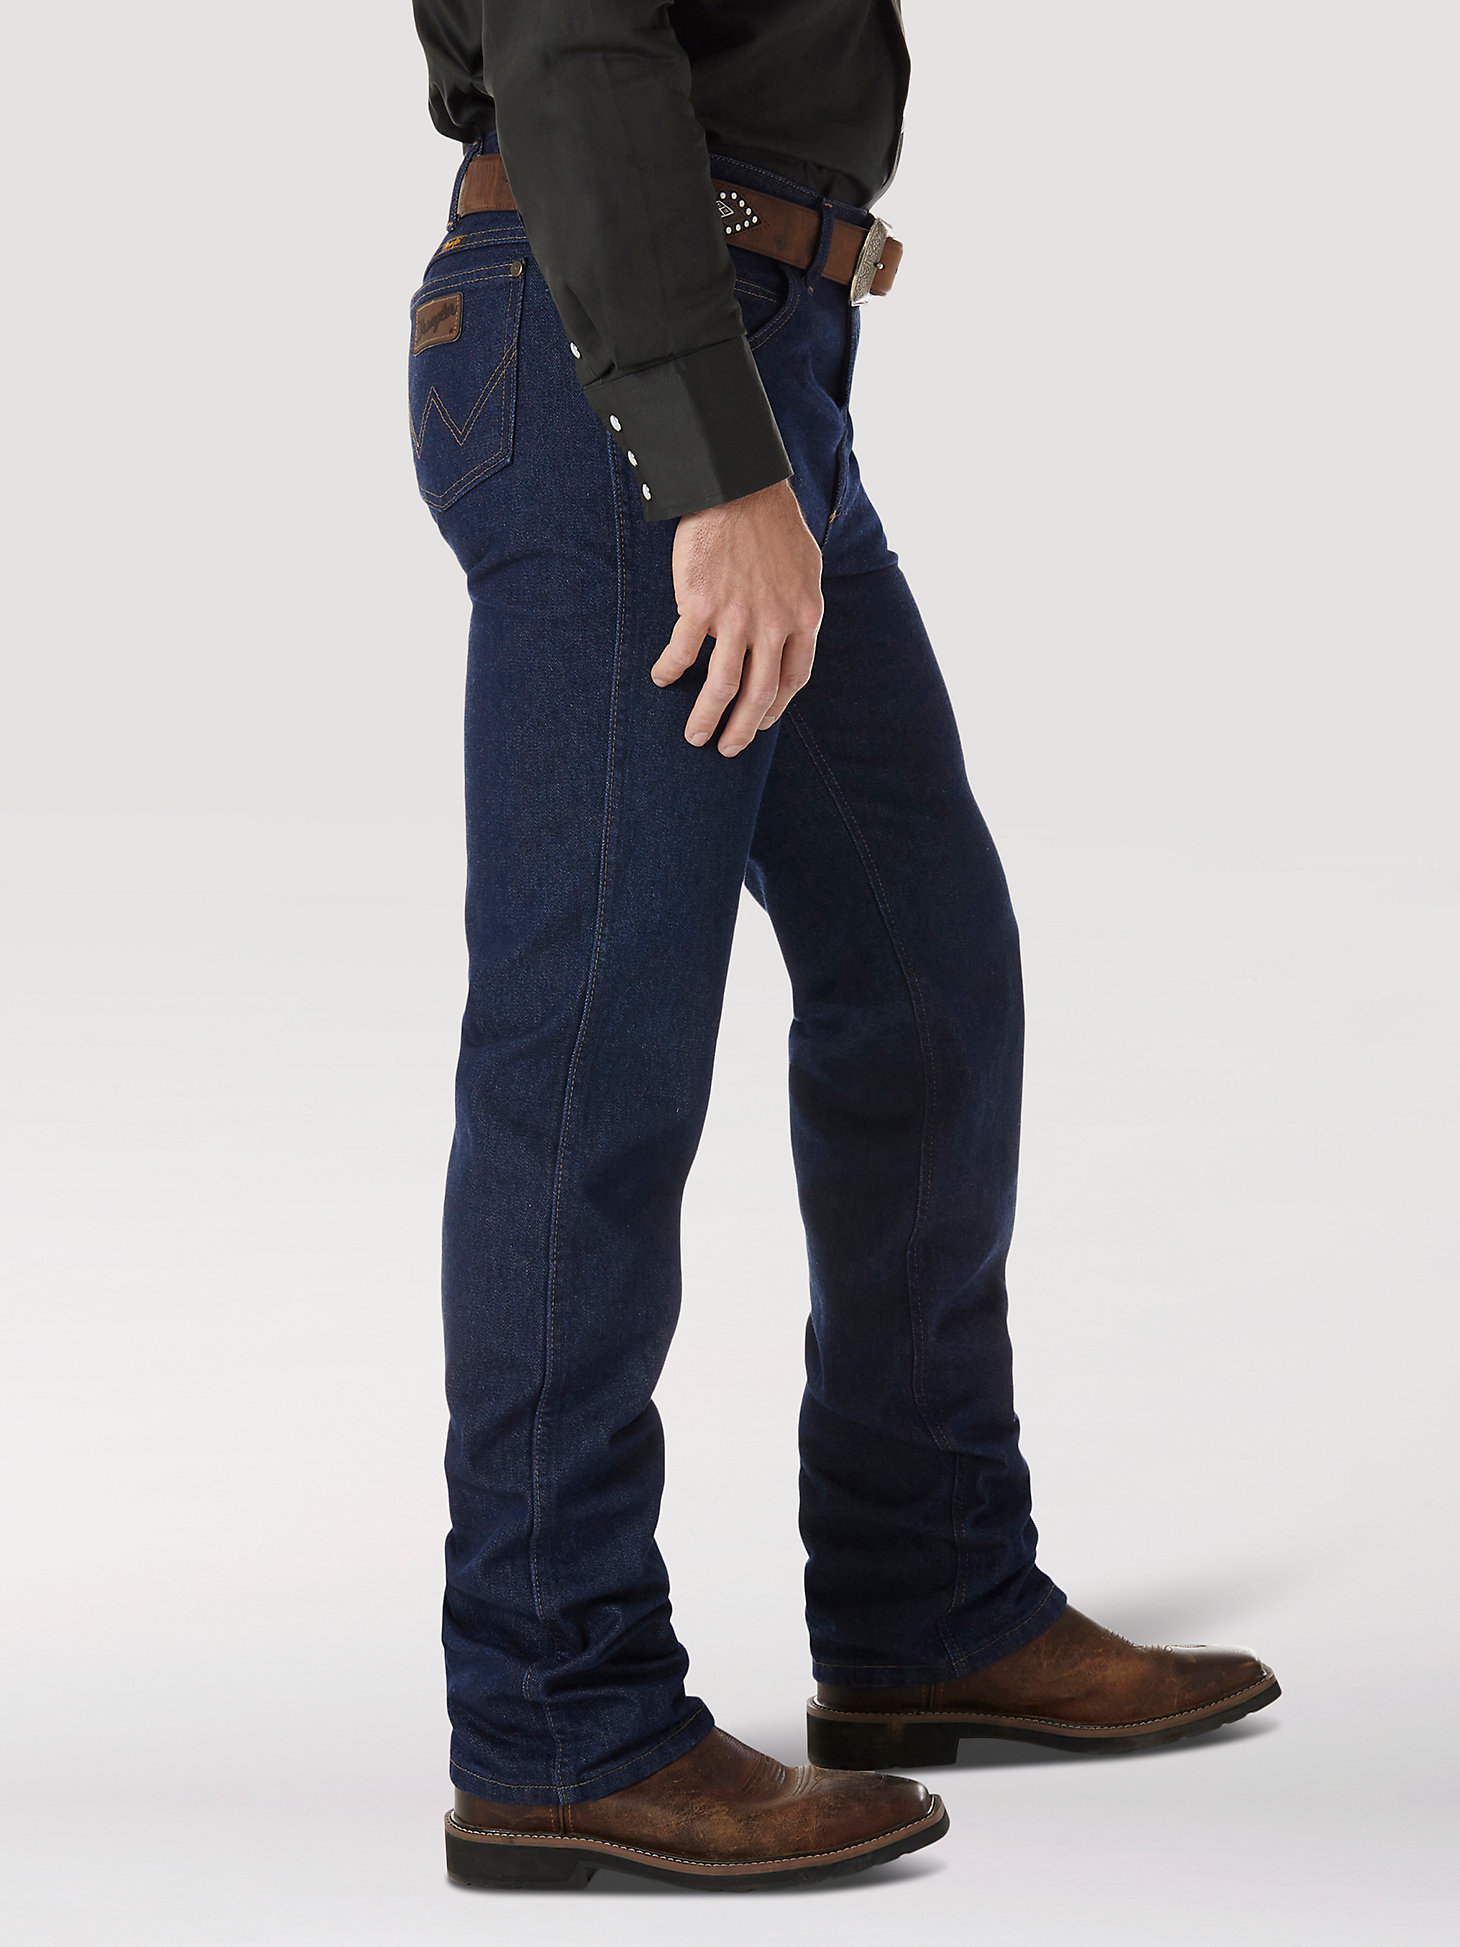 Premium Performance Cowboy Cut® Slim Fit Jean in Prewash alternative view 1